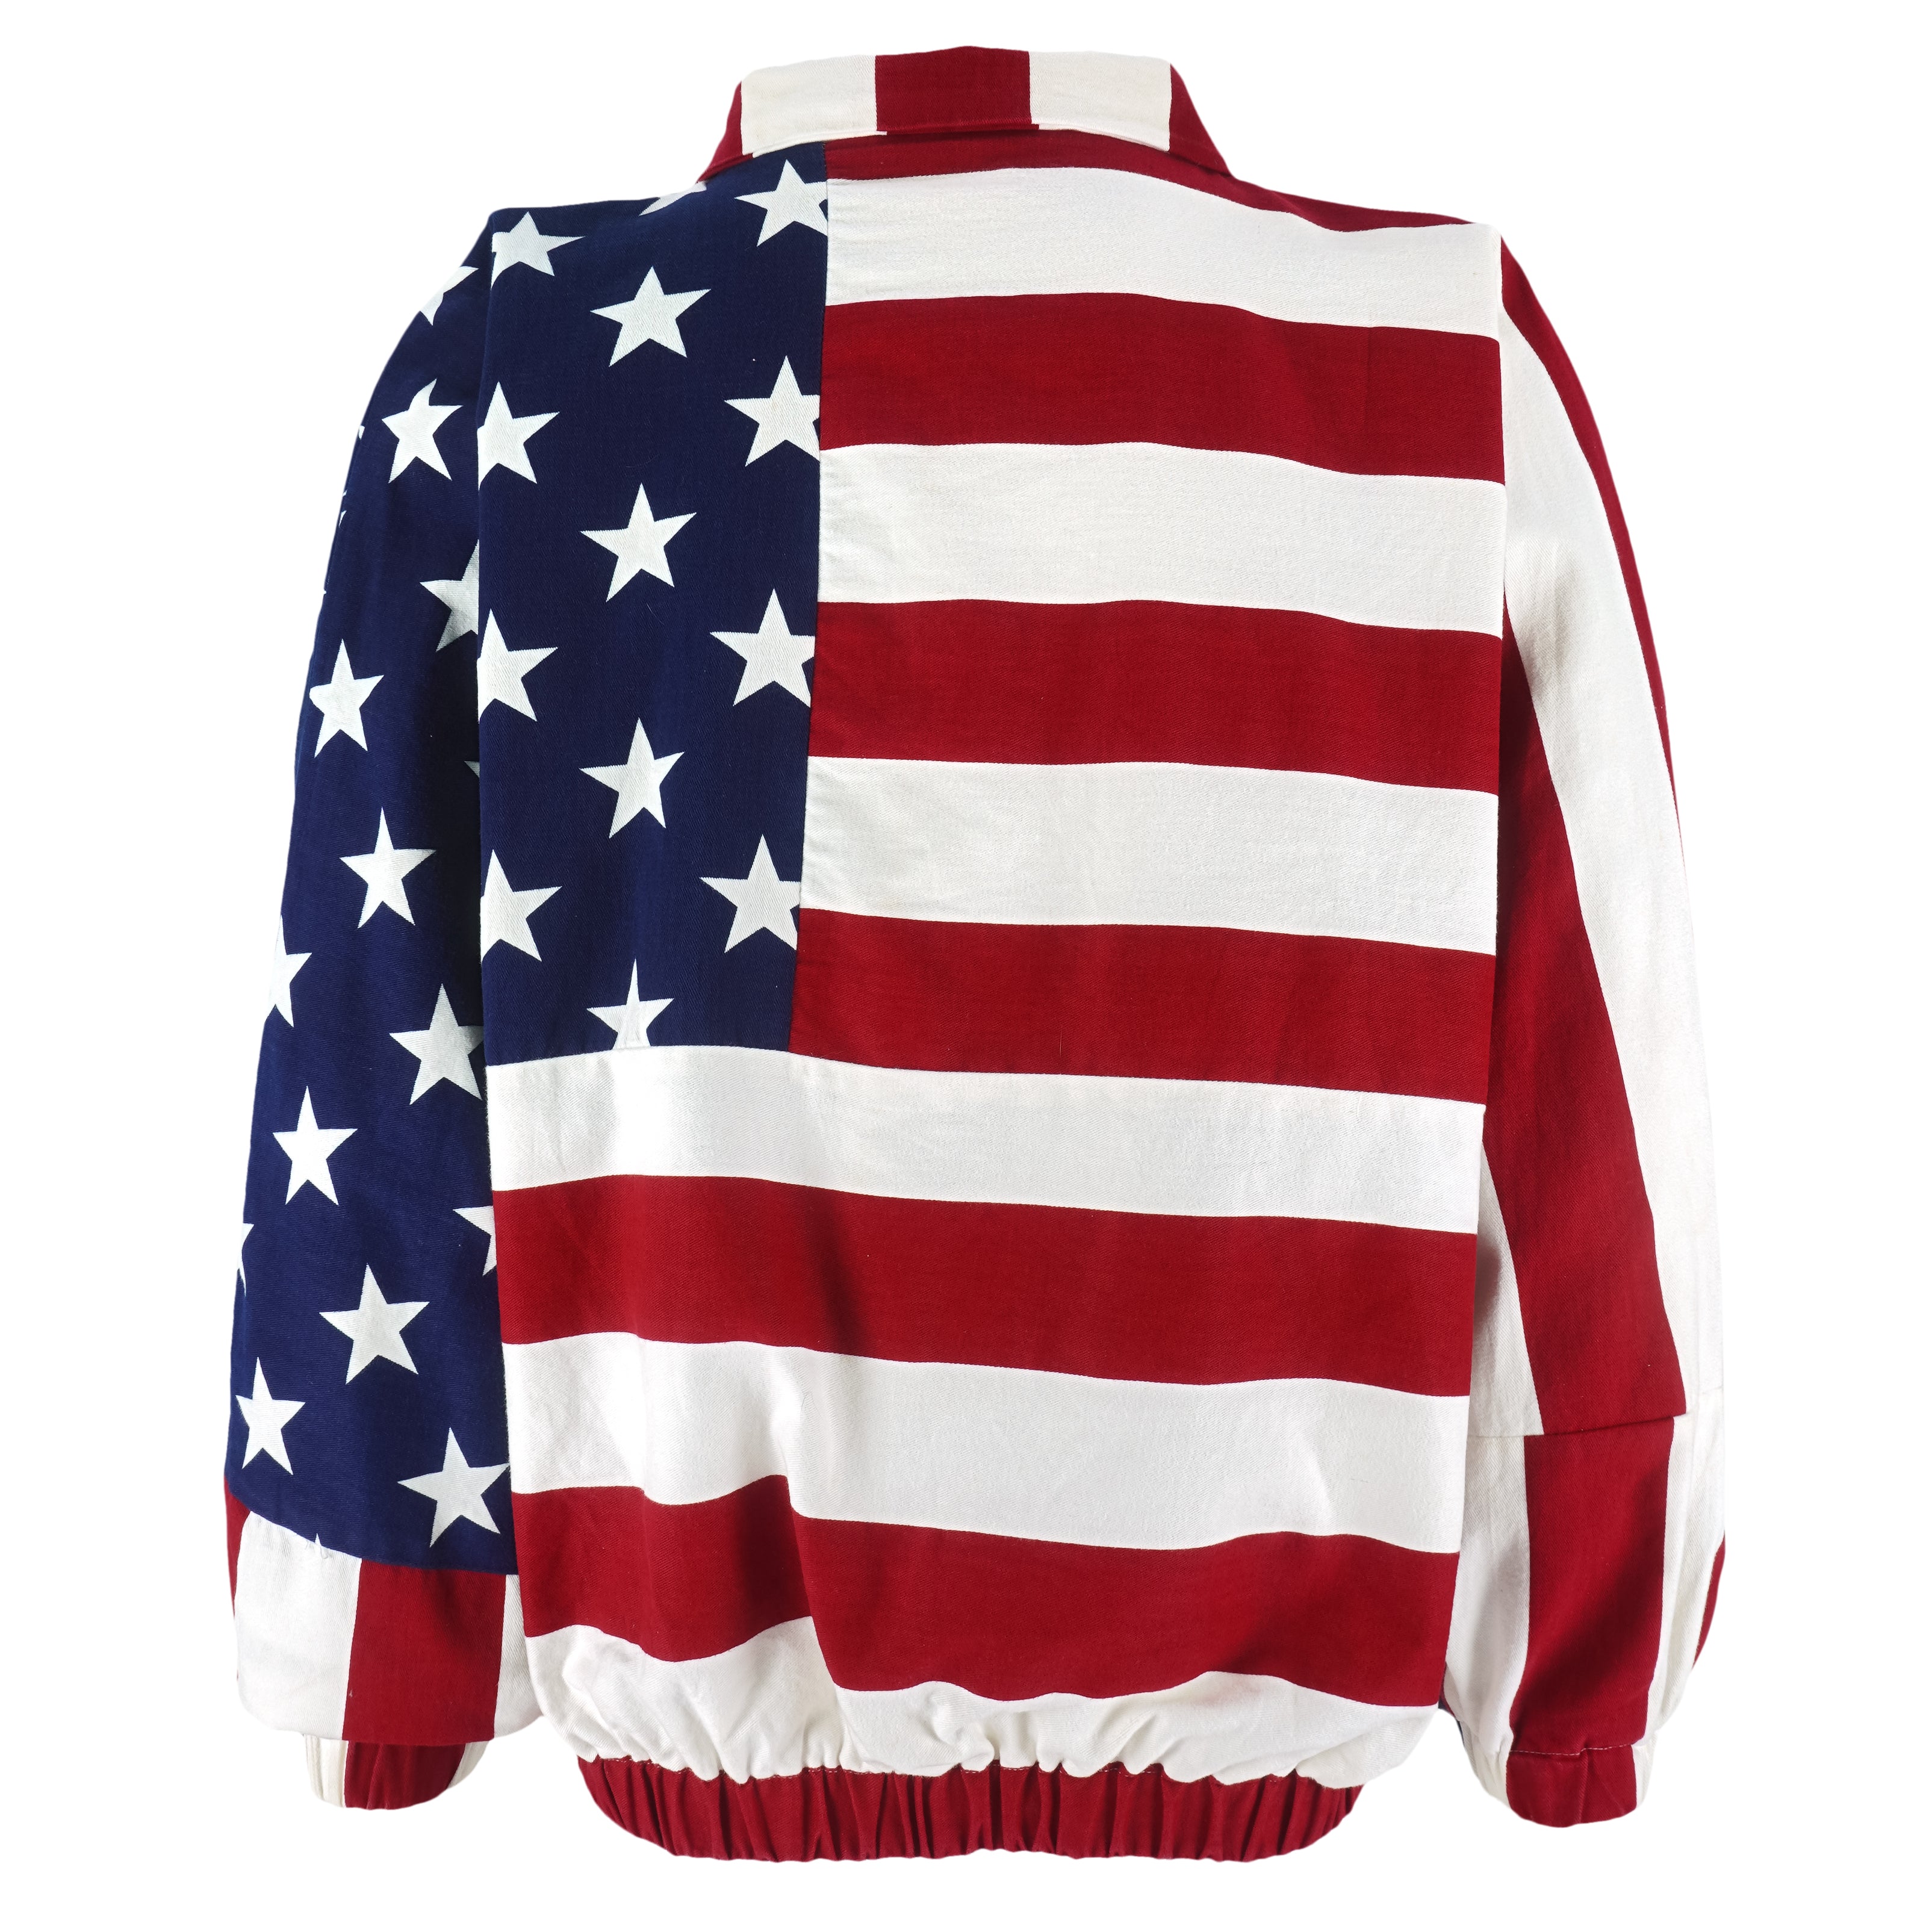 Fashion Model in American Flag Leggings Stock Image - Image of